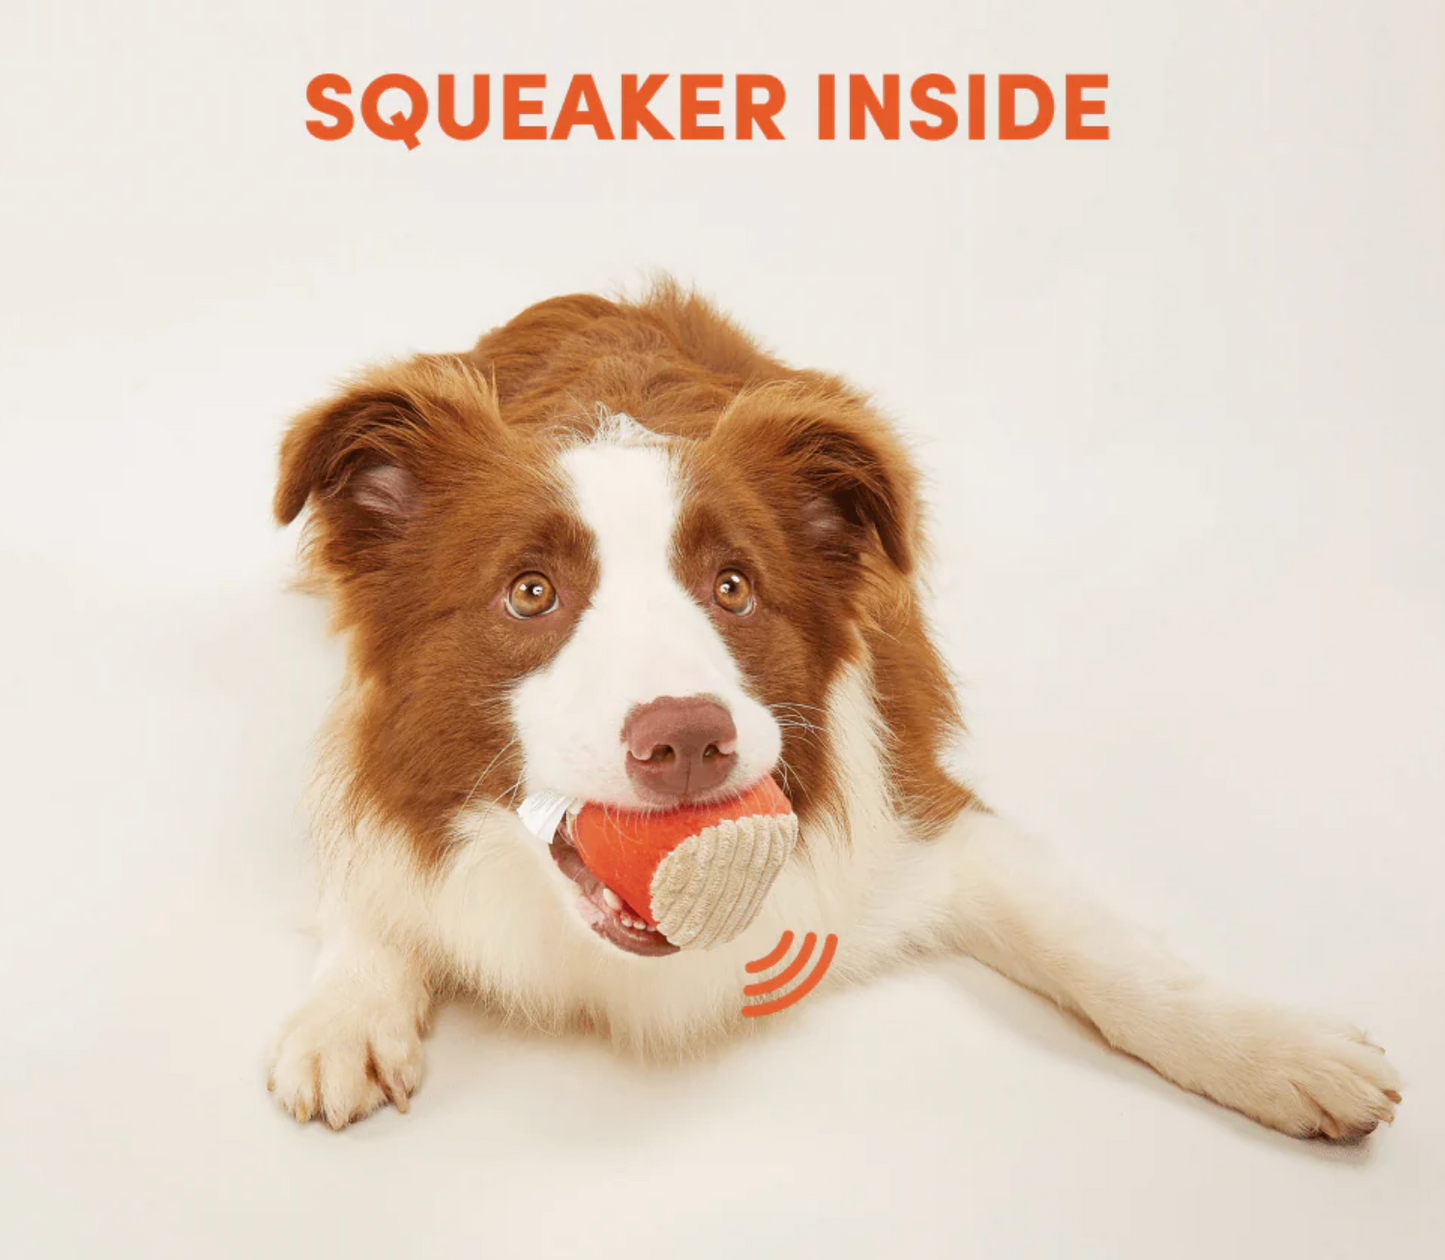 Hide & Seek Toy Bin Dog Toy | Ball, Bone, Rope & Puzzle Box